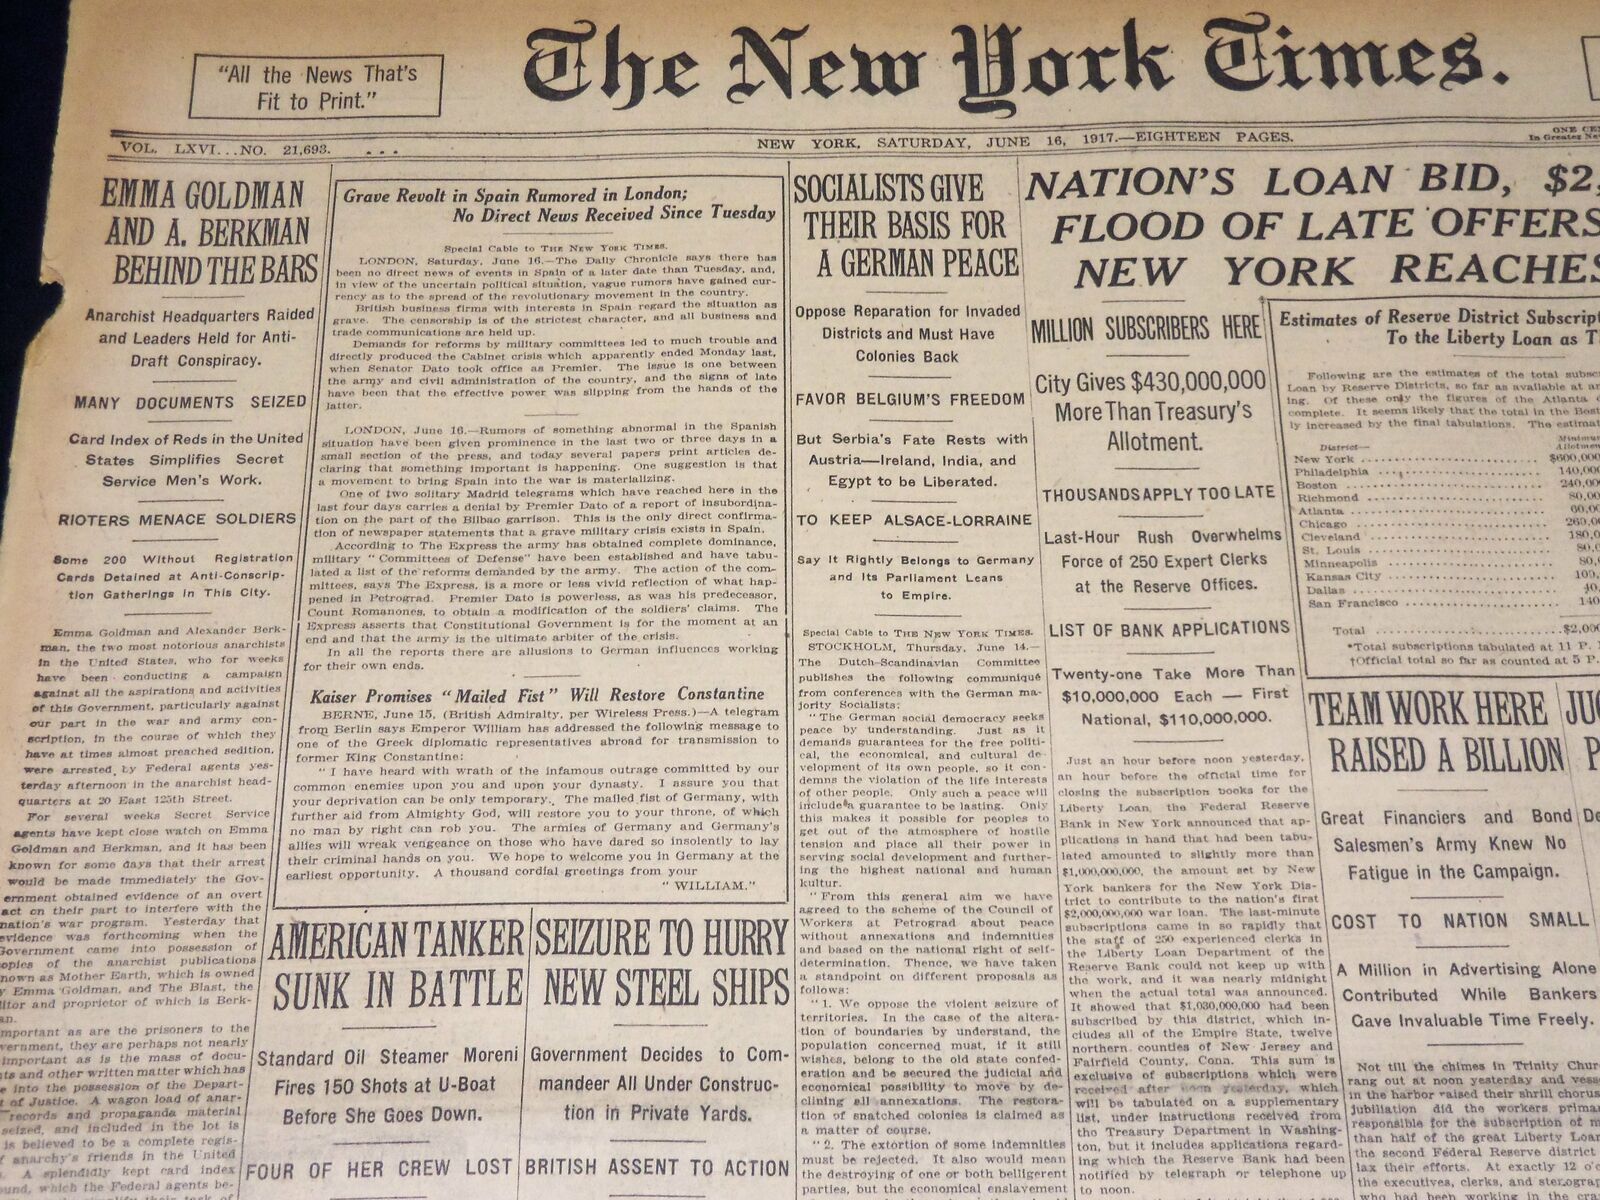 1917 JUNE 16 NEW YORK TIMES - EMMA GOLDMAN AND A. BECKMAN BEHIND BARS - NT 7797